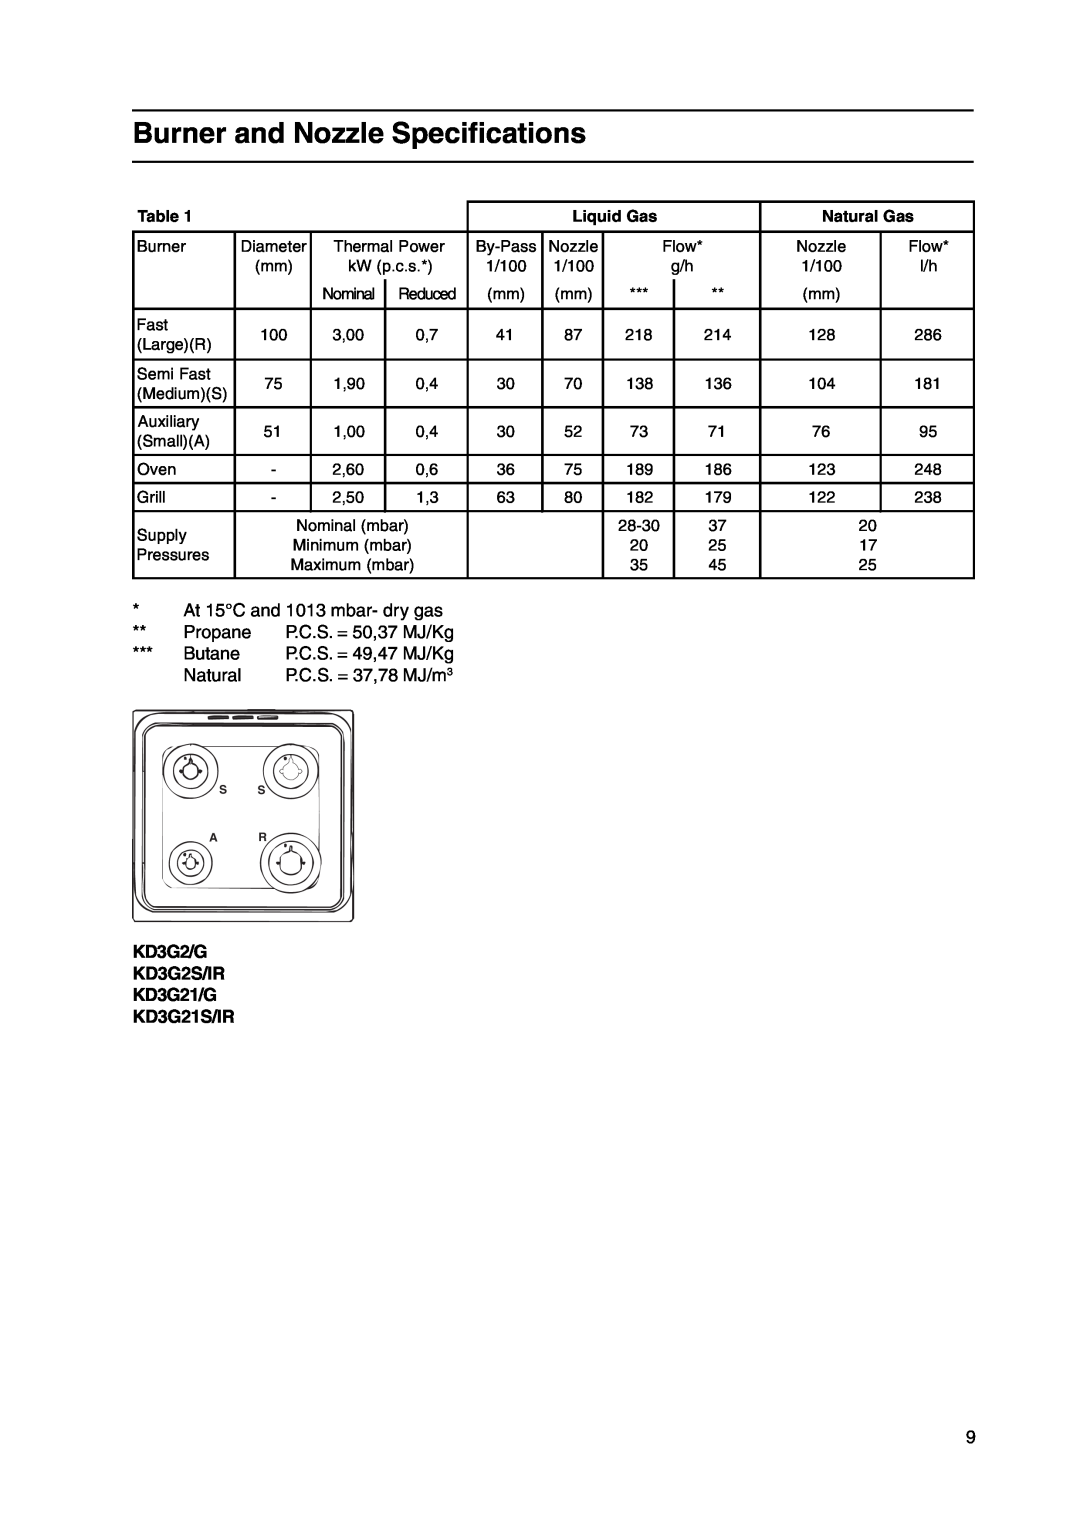 Indesit manual Burner and Nozzle Specifications, KD3G2/G KD3G2S/IR KD3G21/G KD3G21S/IR 